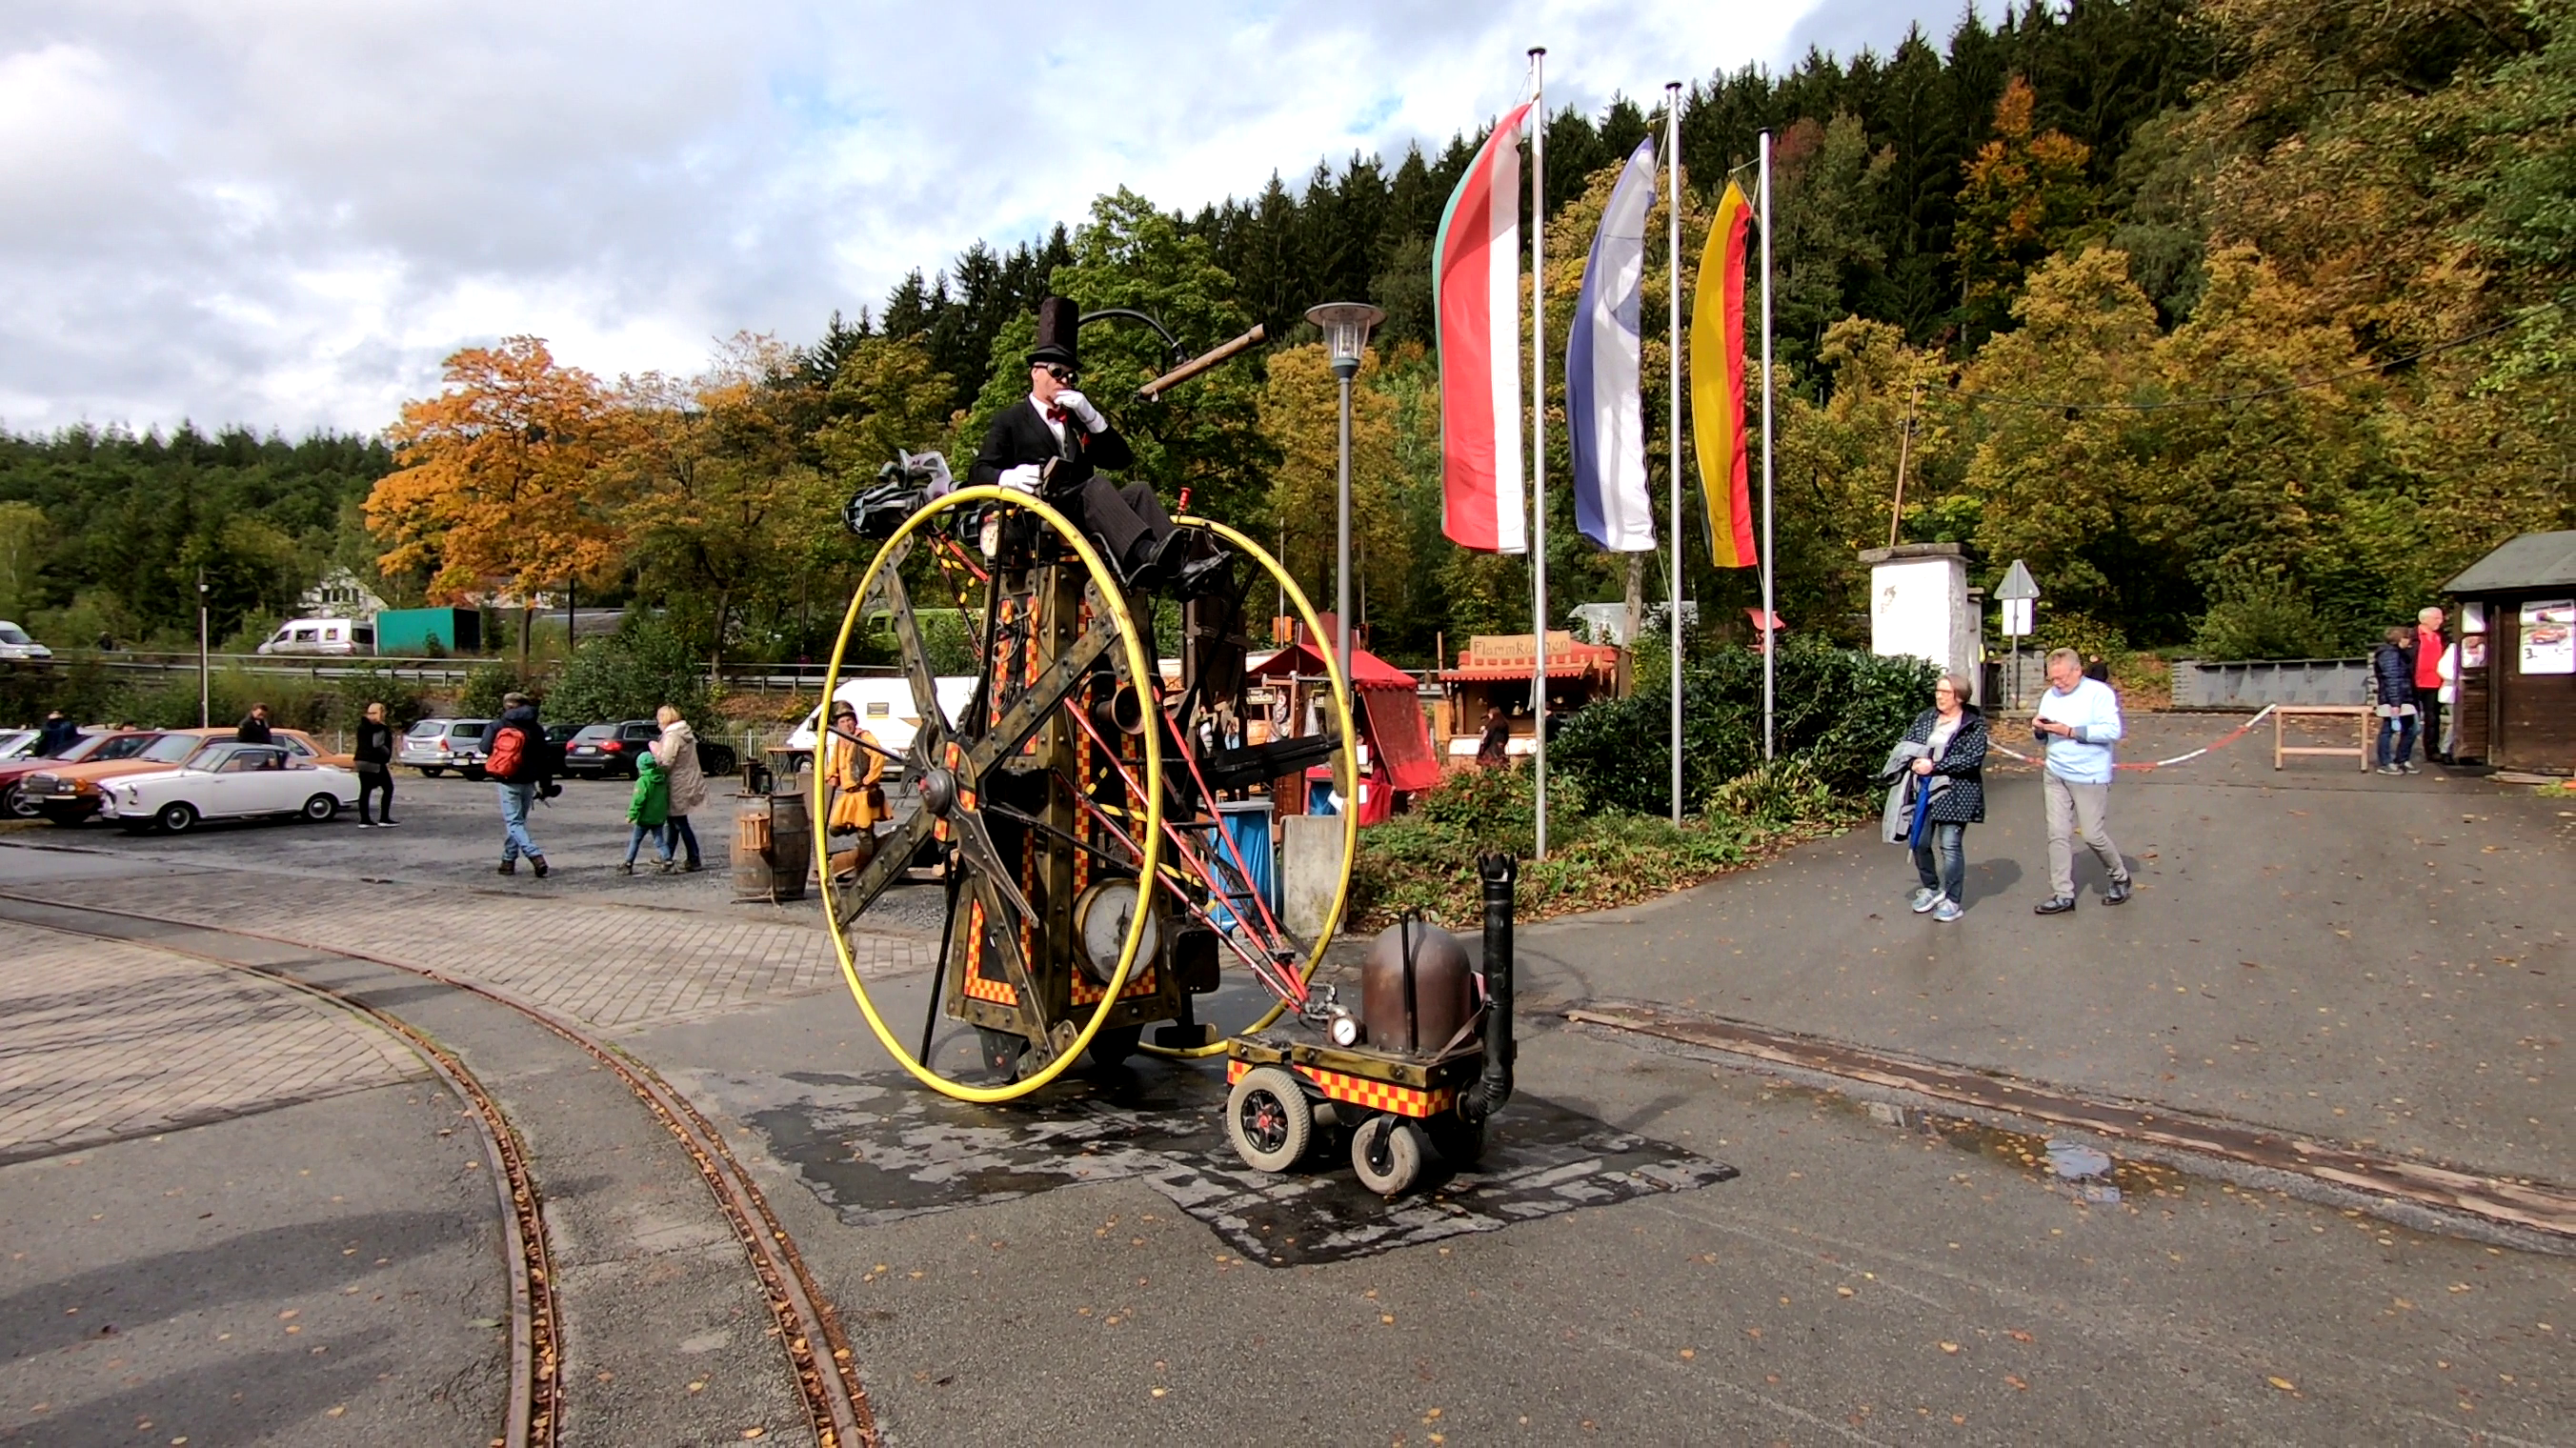 Dampftage im Dampf Land Leute Museum Eslohe mit Steampunk Festival 29. Sept. 2019